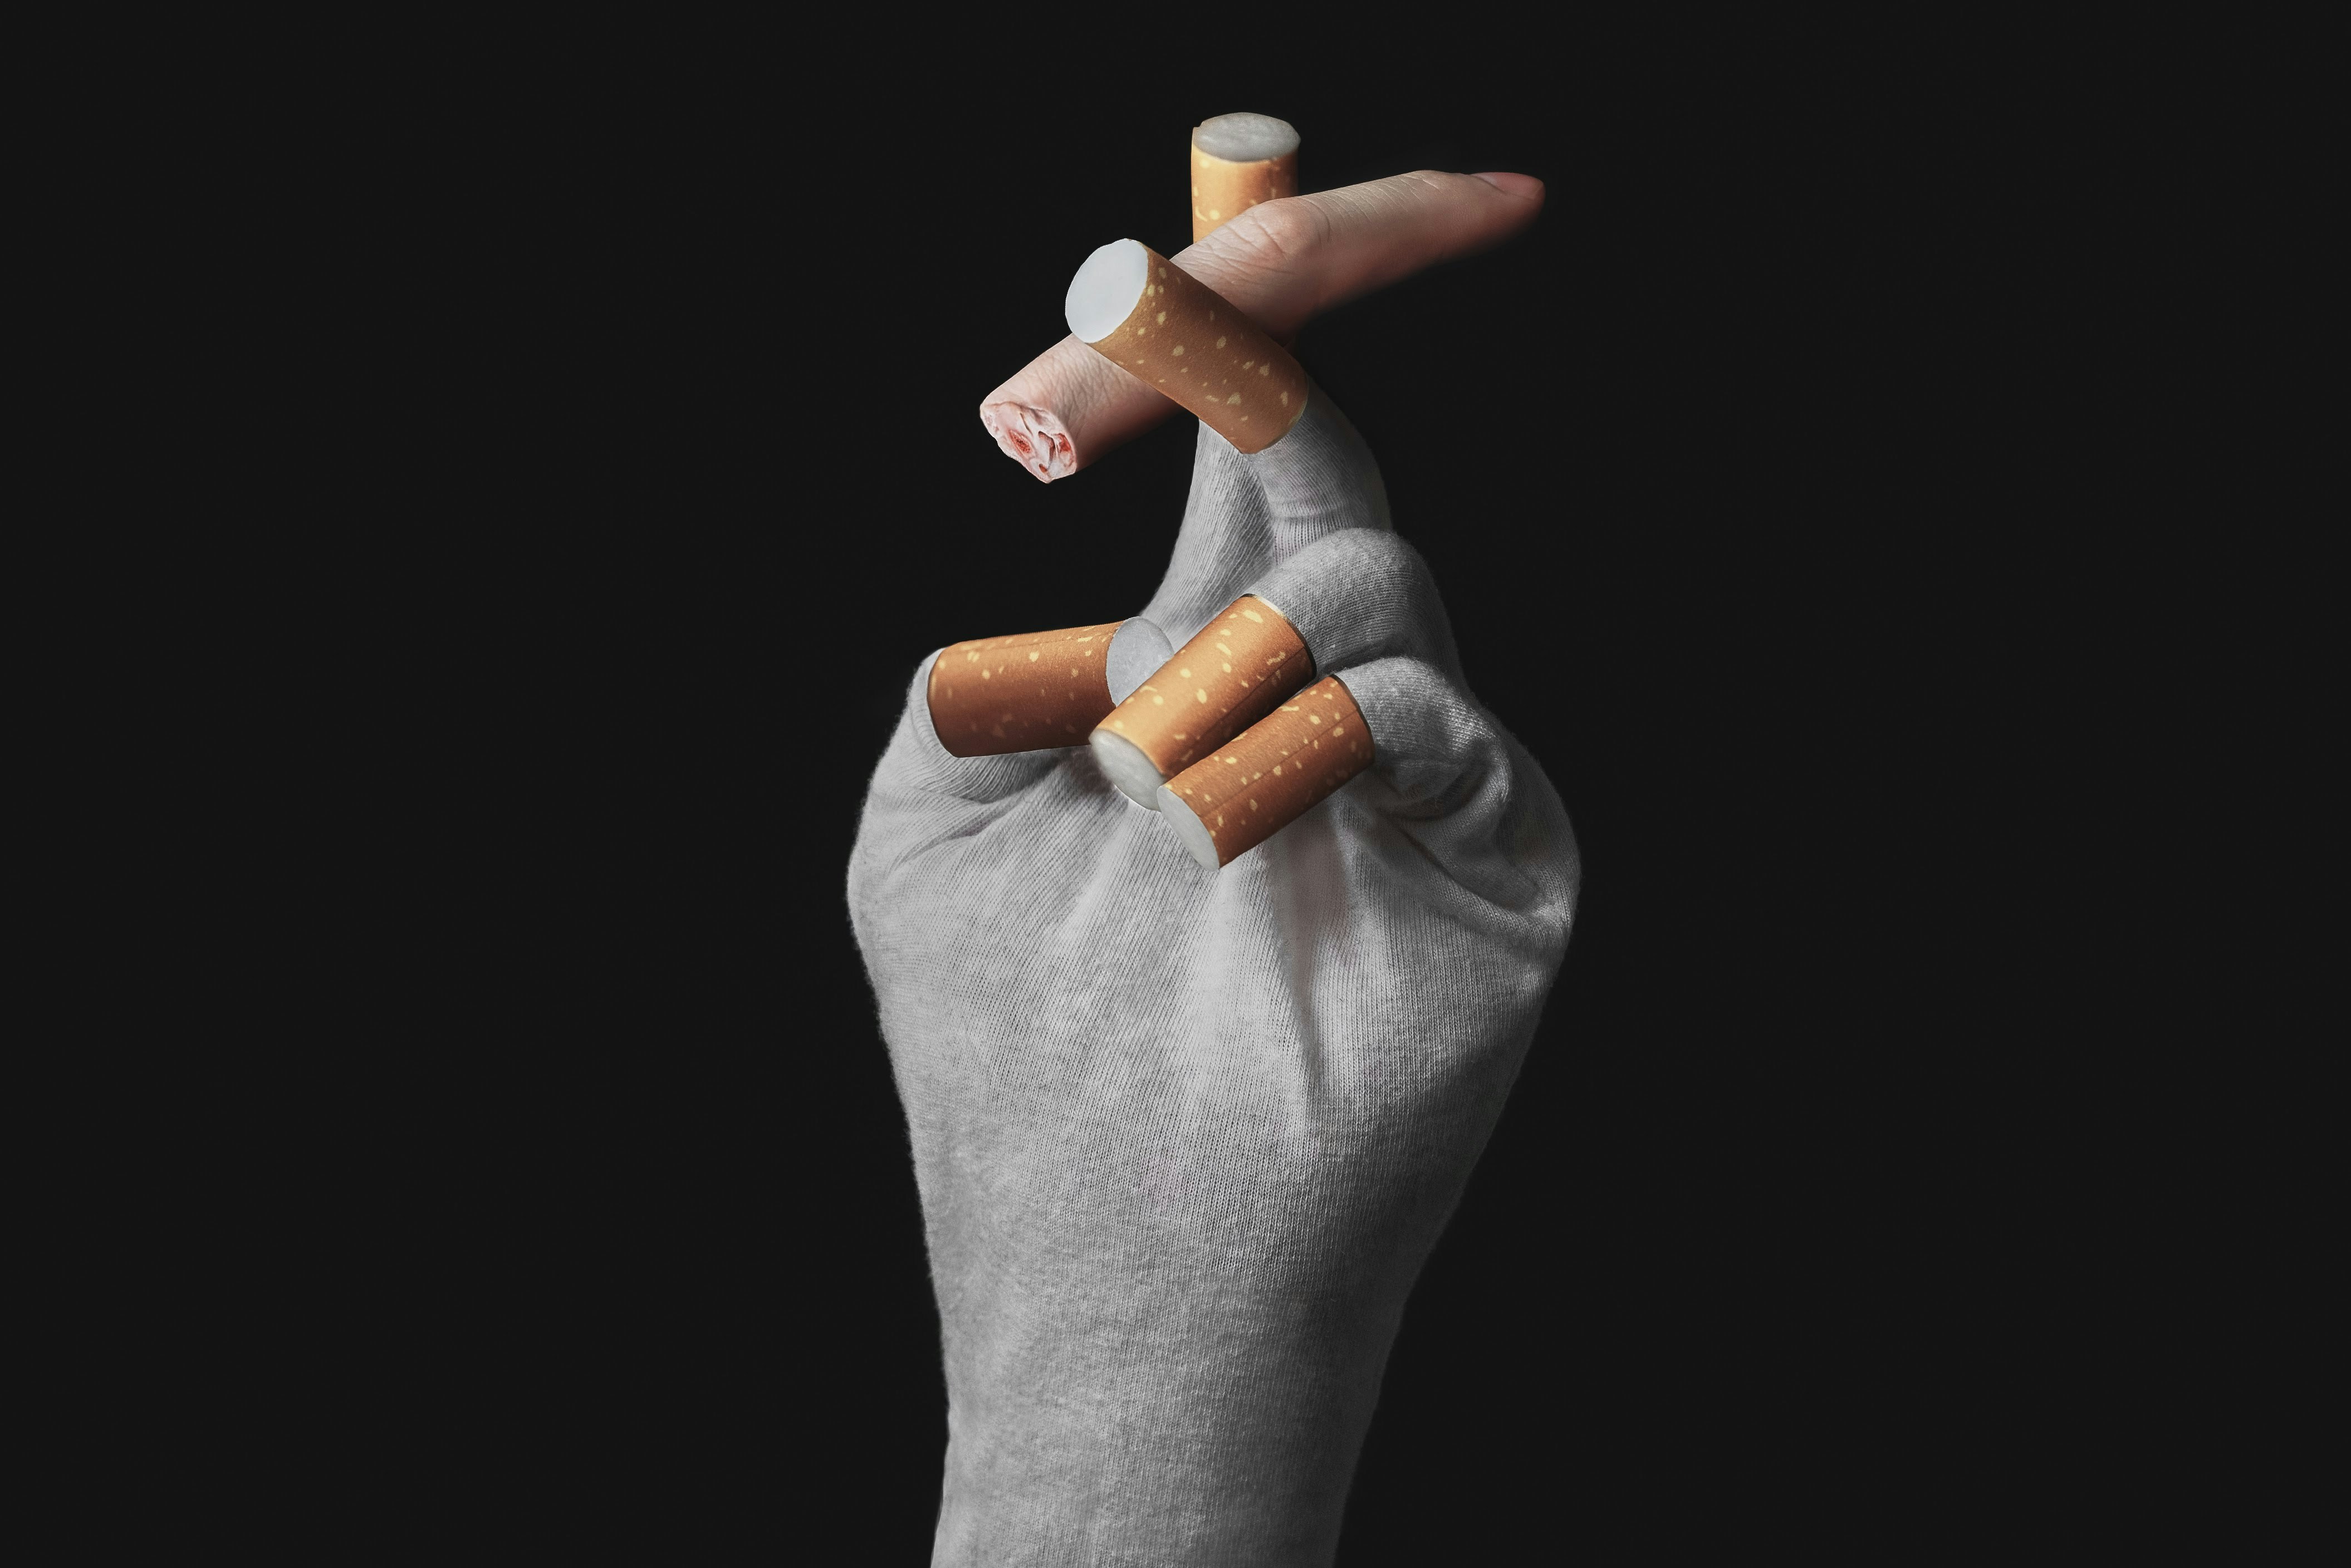 person holding orange medication pill